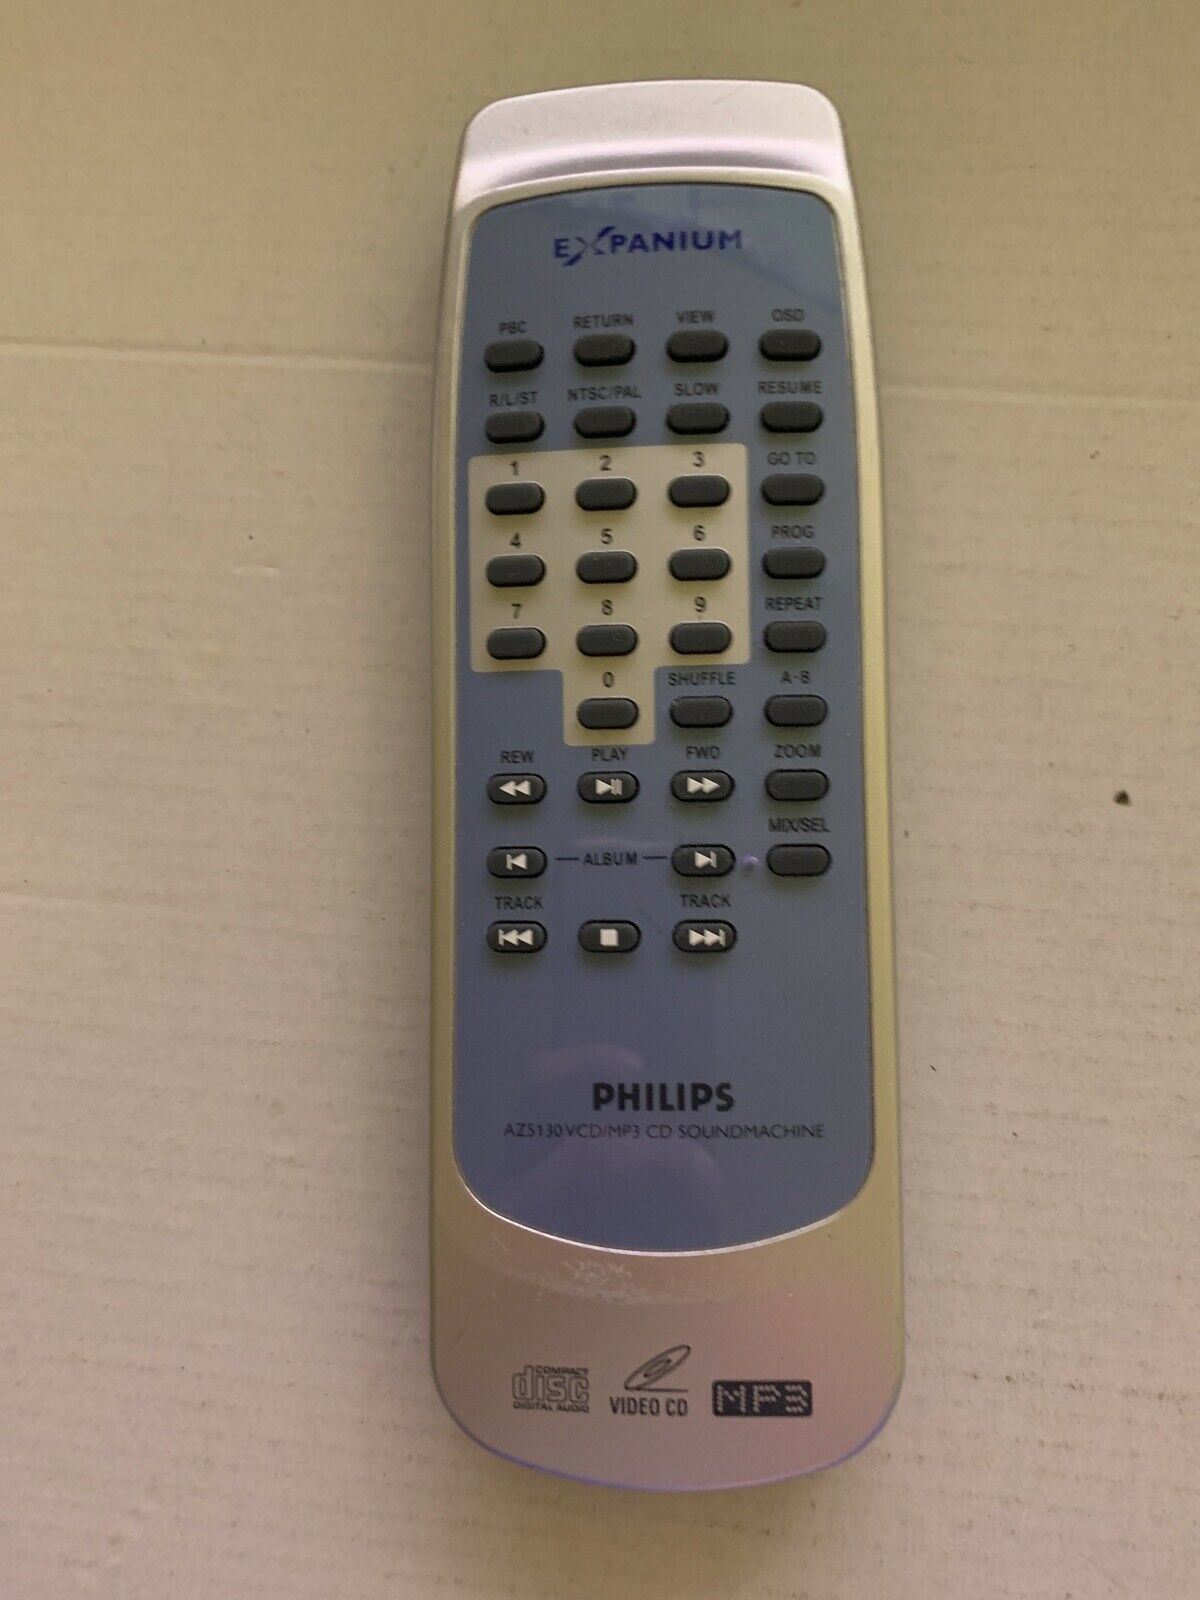 Philips AZ5130VCDP3 CD SoundMachine Remote Control – Retro Unit